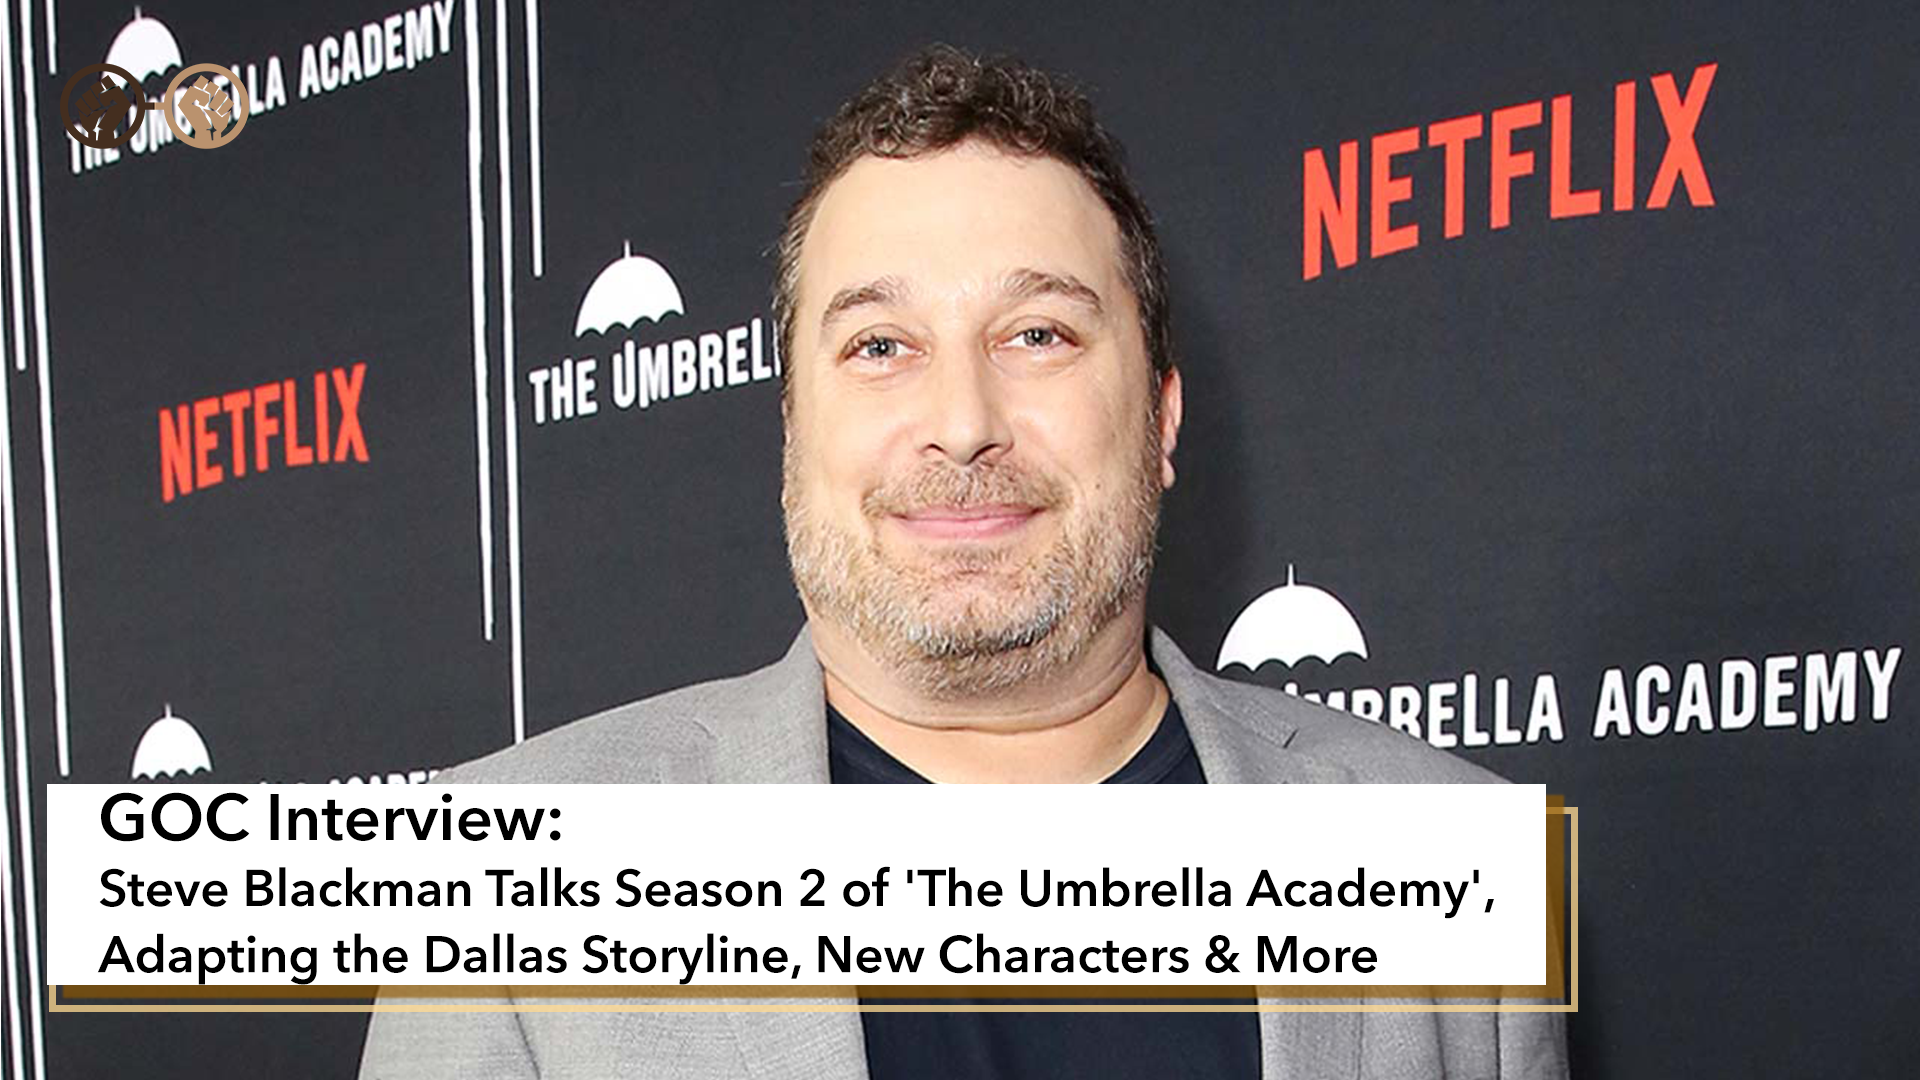 Interview: Steve Blackman talks ‘The Umbrella Academy’ Season 2 Spoilers & More